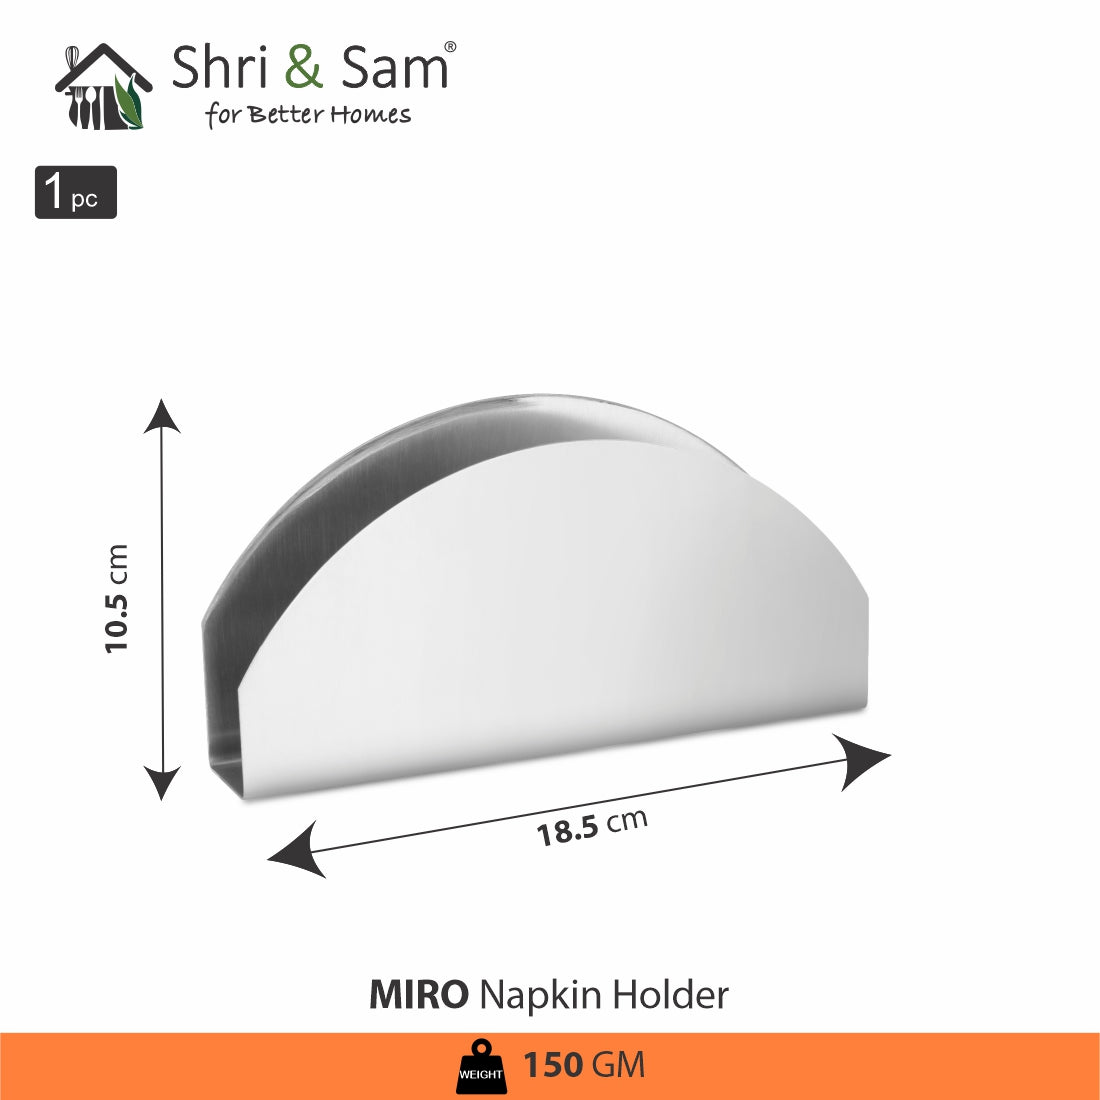 Stainless Steel Napkin or Tissue Holder Miro